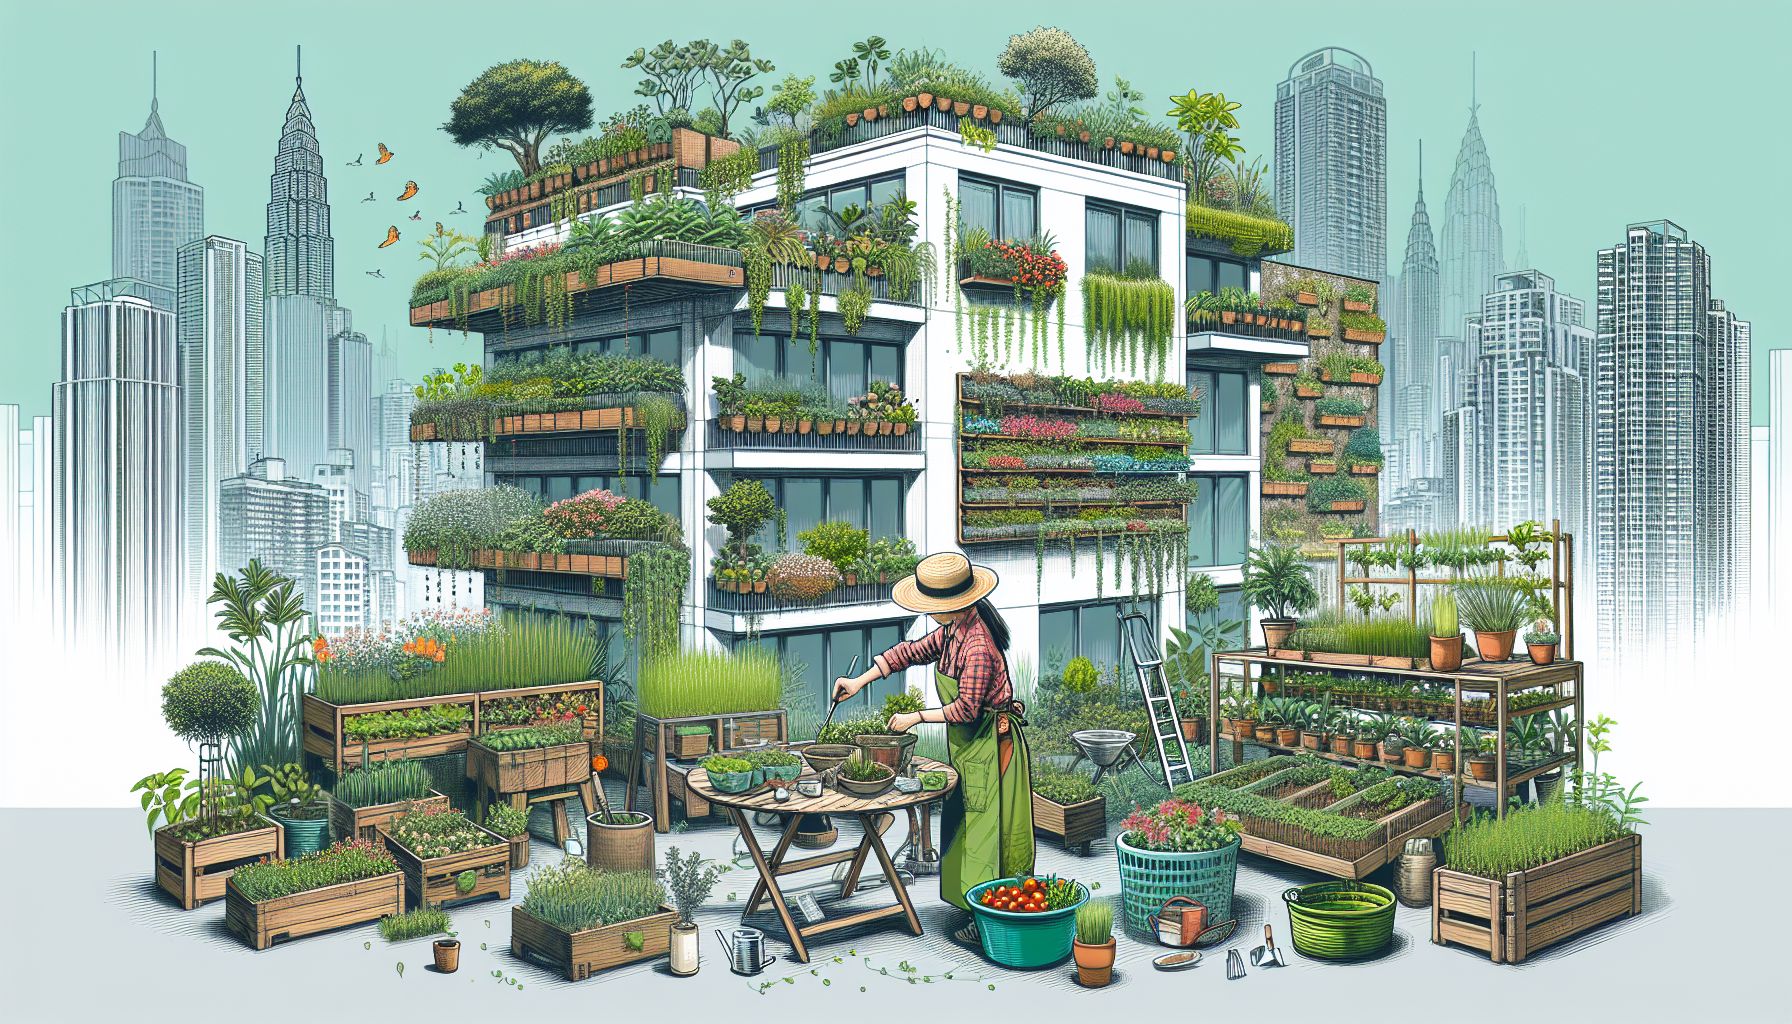 Gardening Tips for the Avid Green thumb: Maximizing Gardening Ideas in an Urban Environment